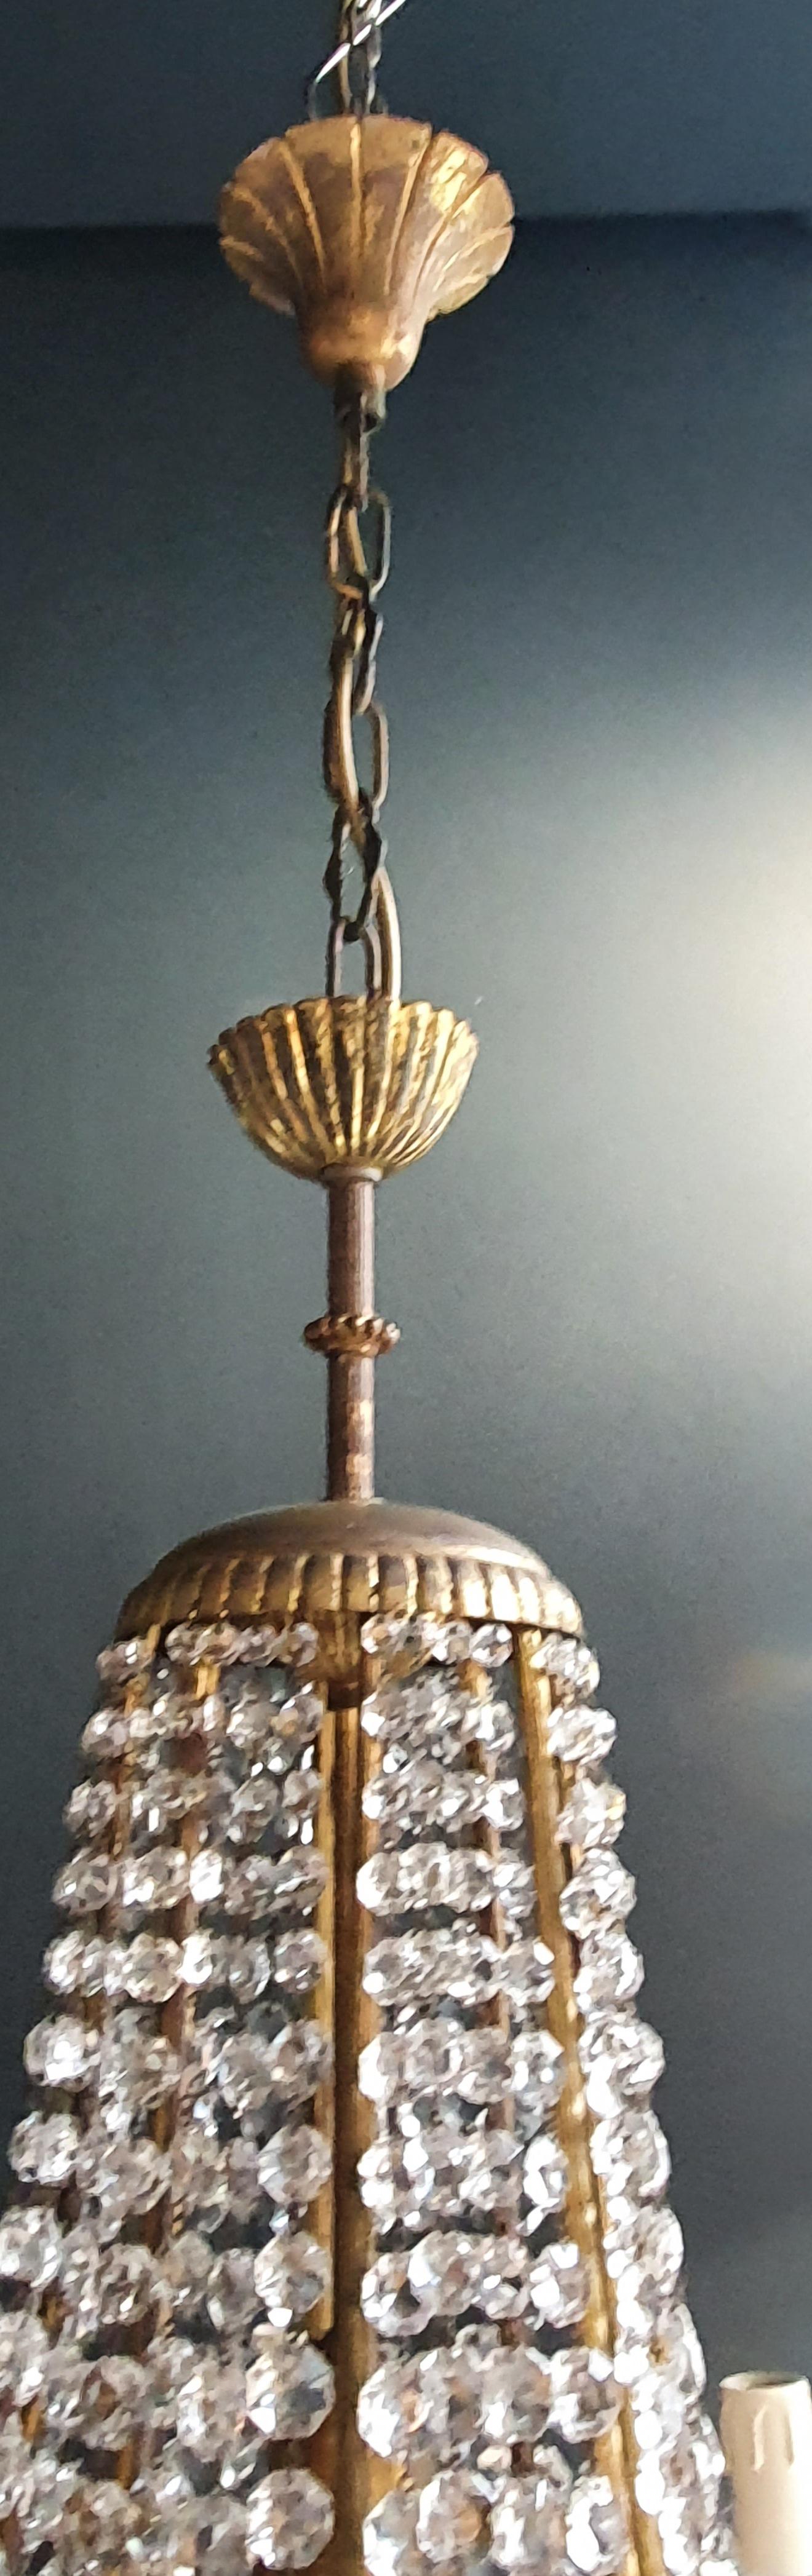 Hand-Knotted Fine Brass Empire Chandelier Crystal Lustre Basket Lamp Antique